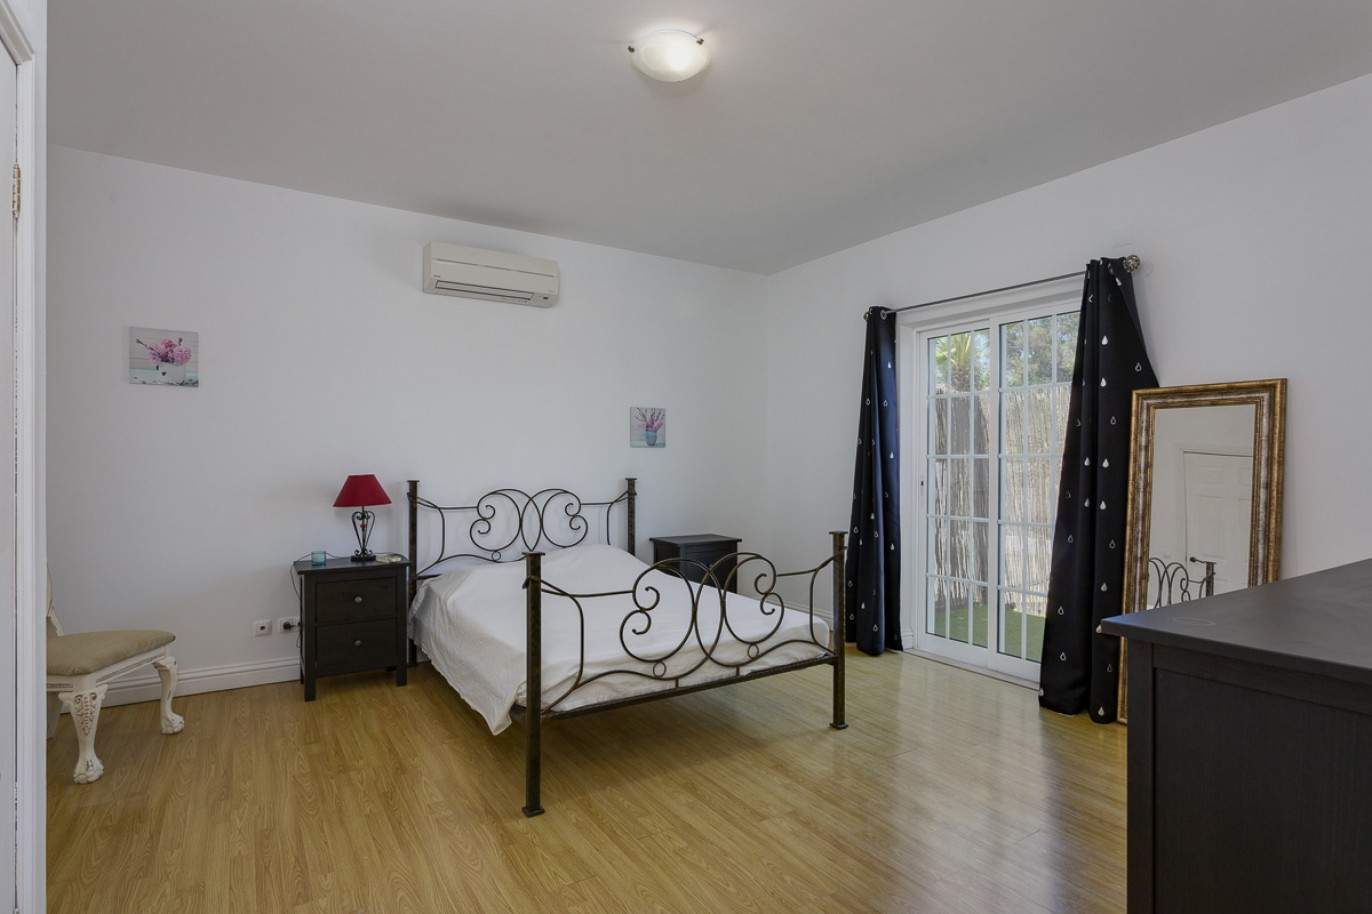 4 Bedroom Villa with sea view, for sale in Boliqueime, Algarve_209939